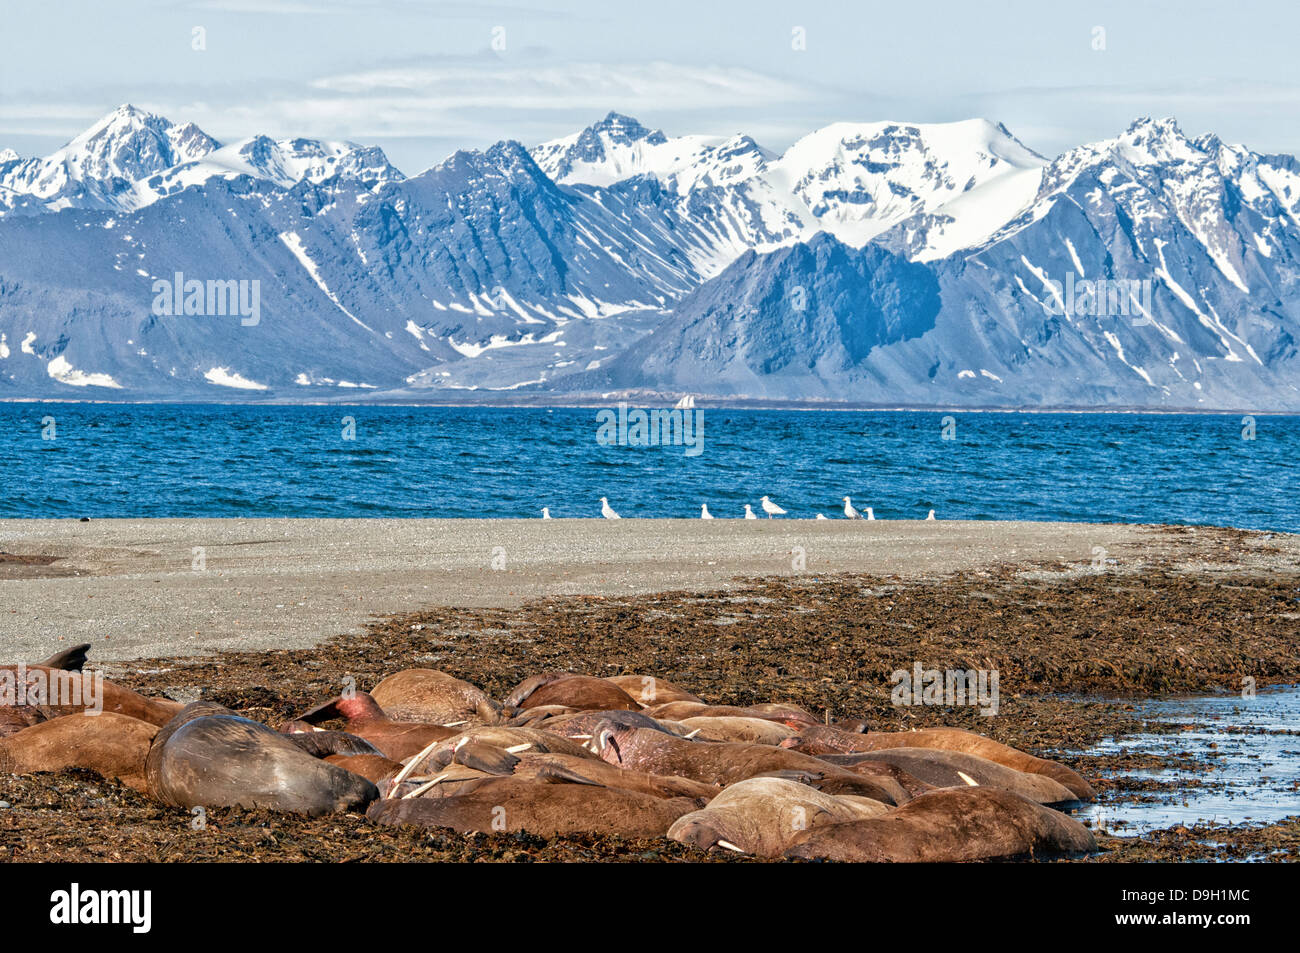 Cala di tricheco, Odobenus rosmarus, Poolepynten, arcipelago delle Svalbard, Norvegia Foto Stock